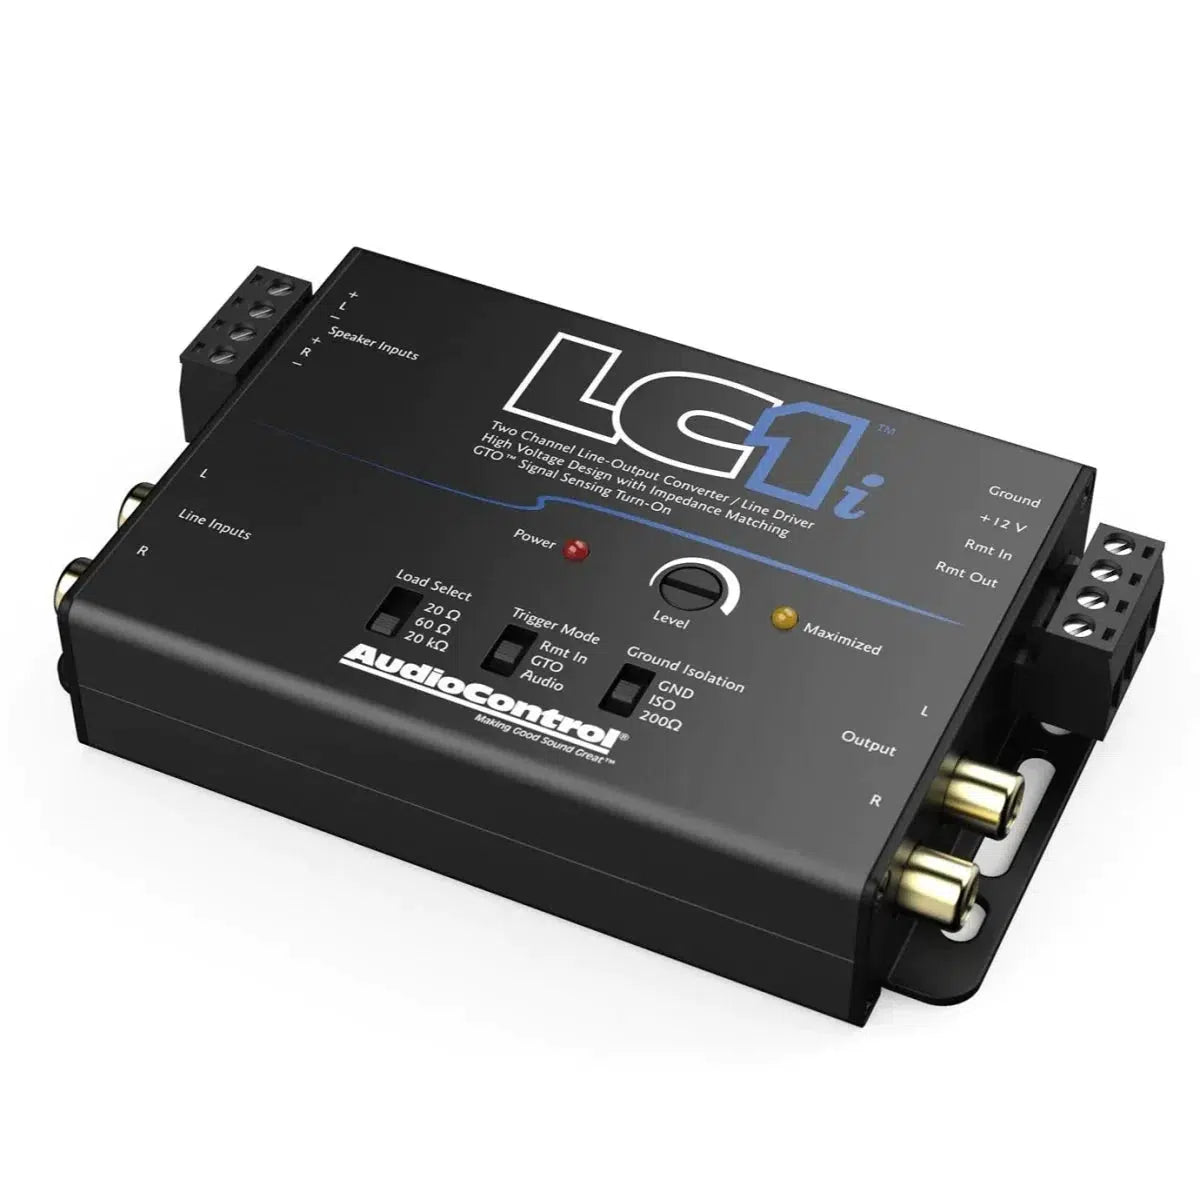 Audiocontrol-LC1i-High-Low Adapter-Masori.fr